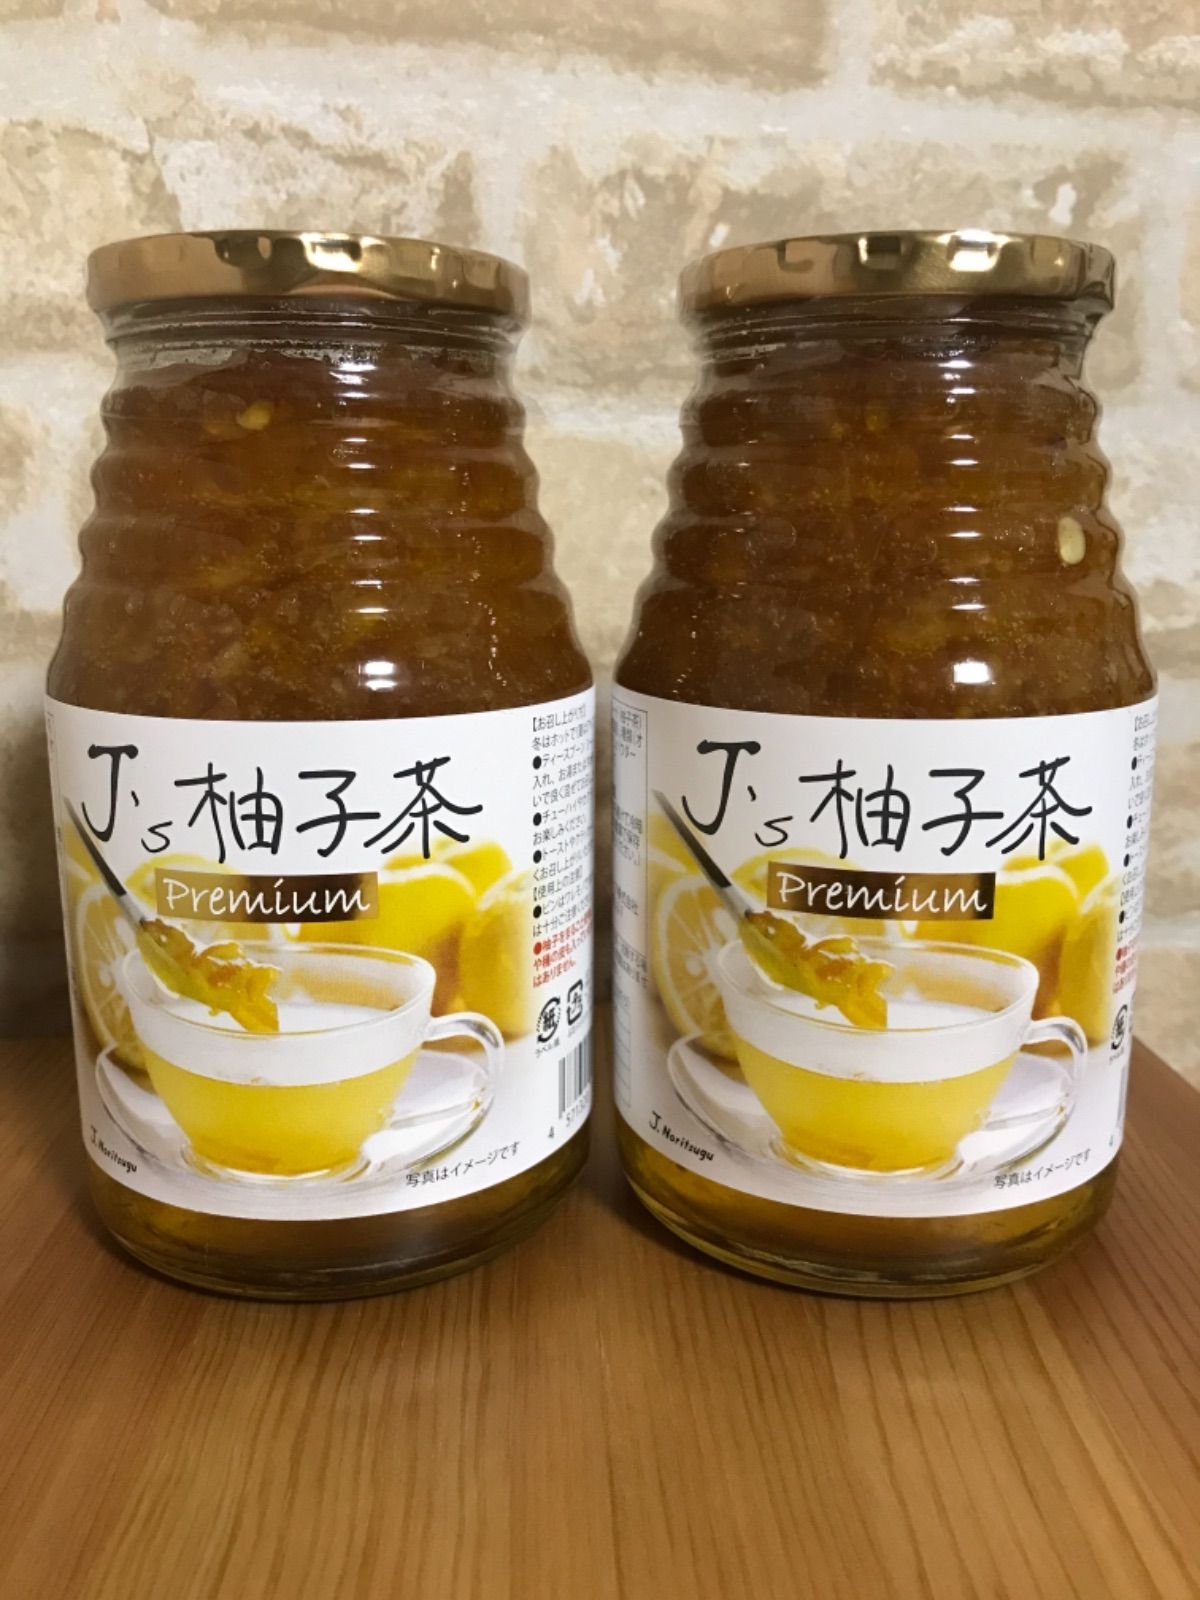 J.ノリツグ 柚子茶 1kg×2本セット❗️ - メルカリ